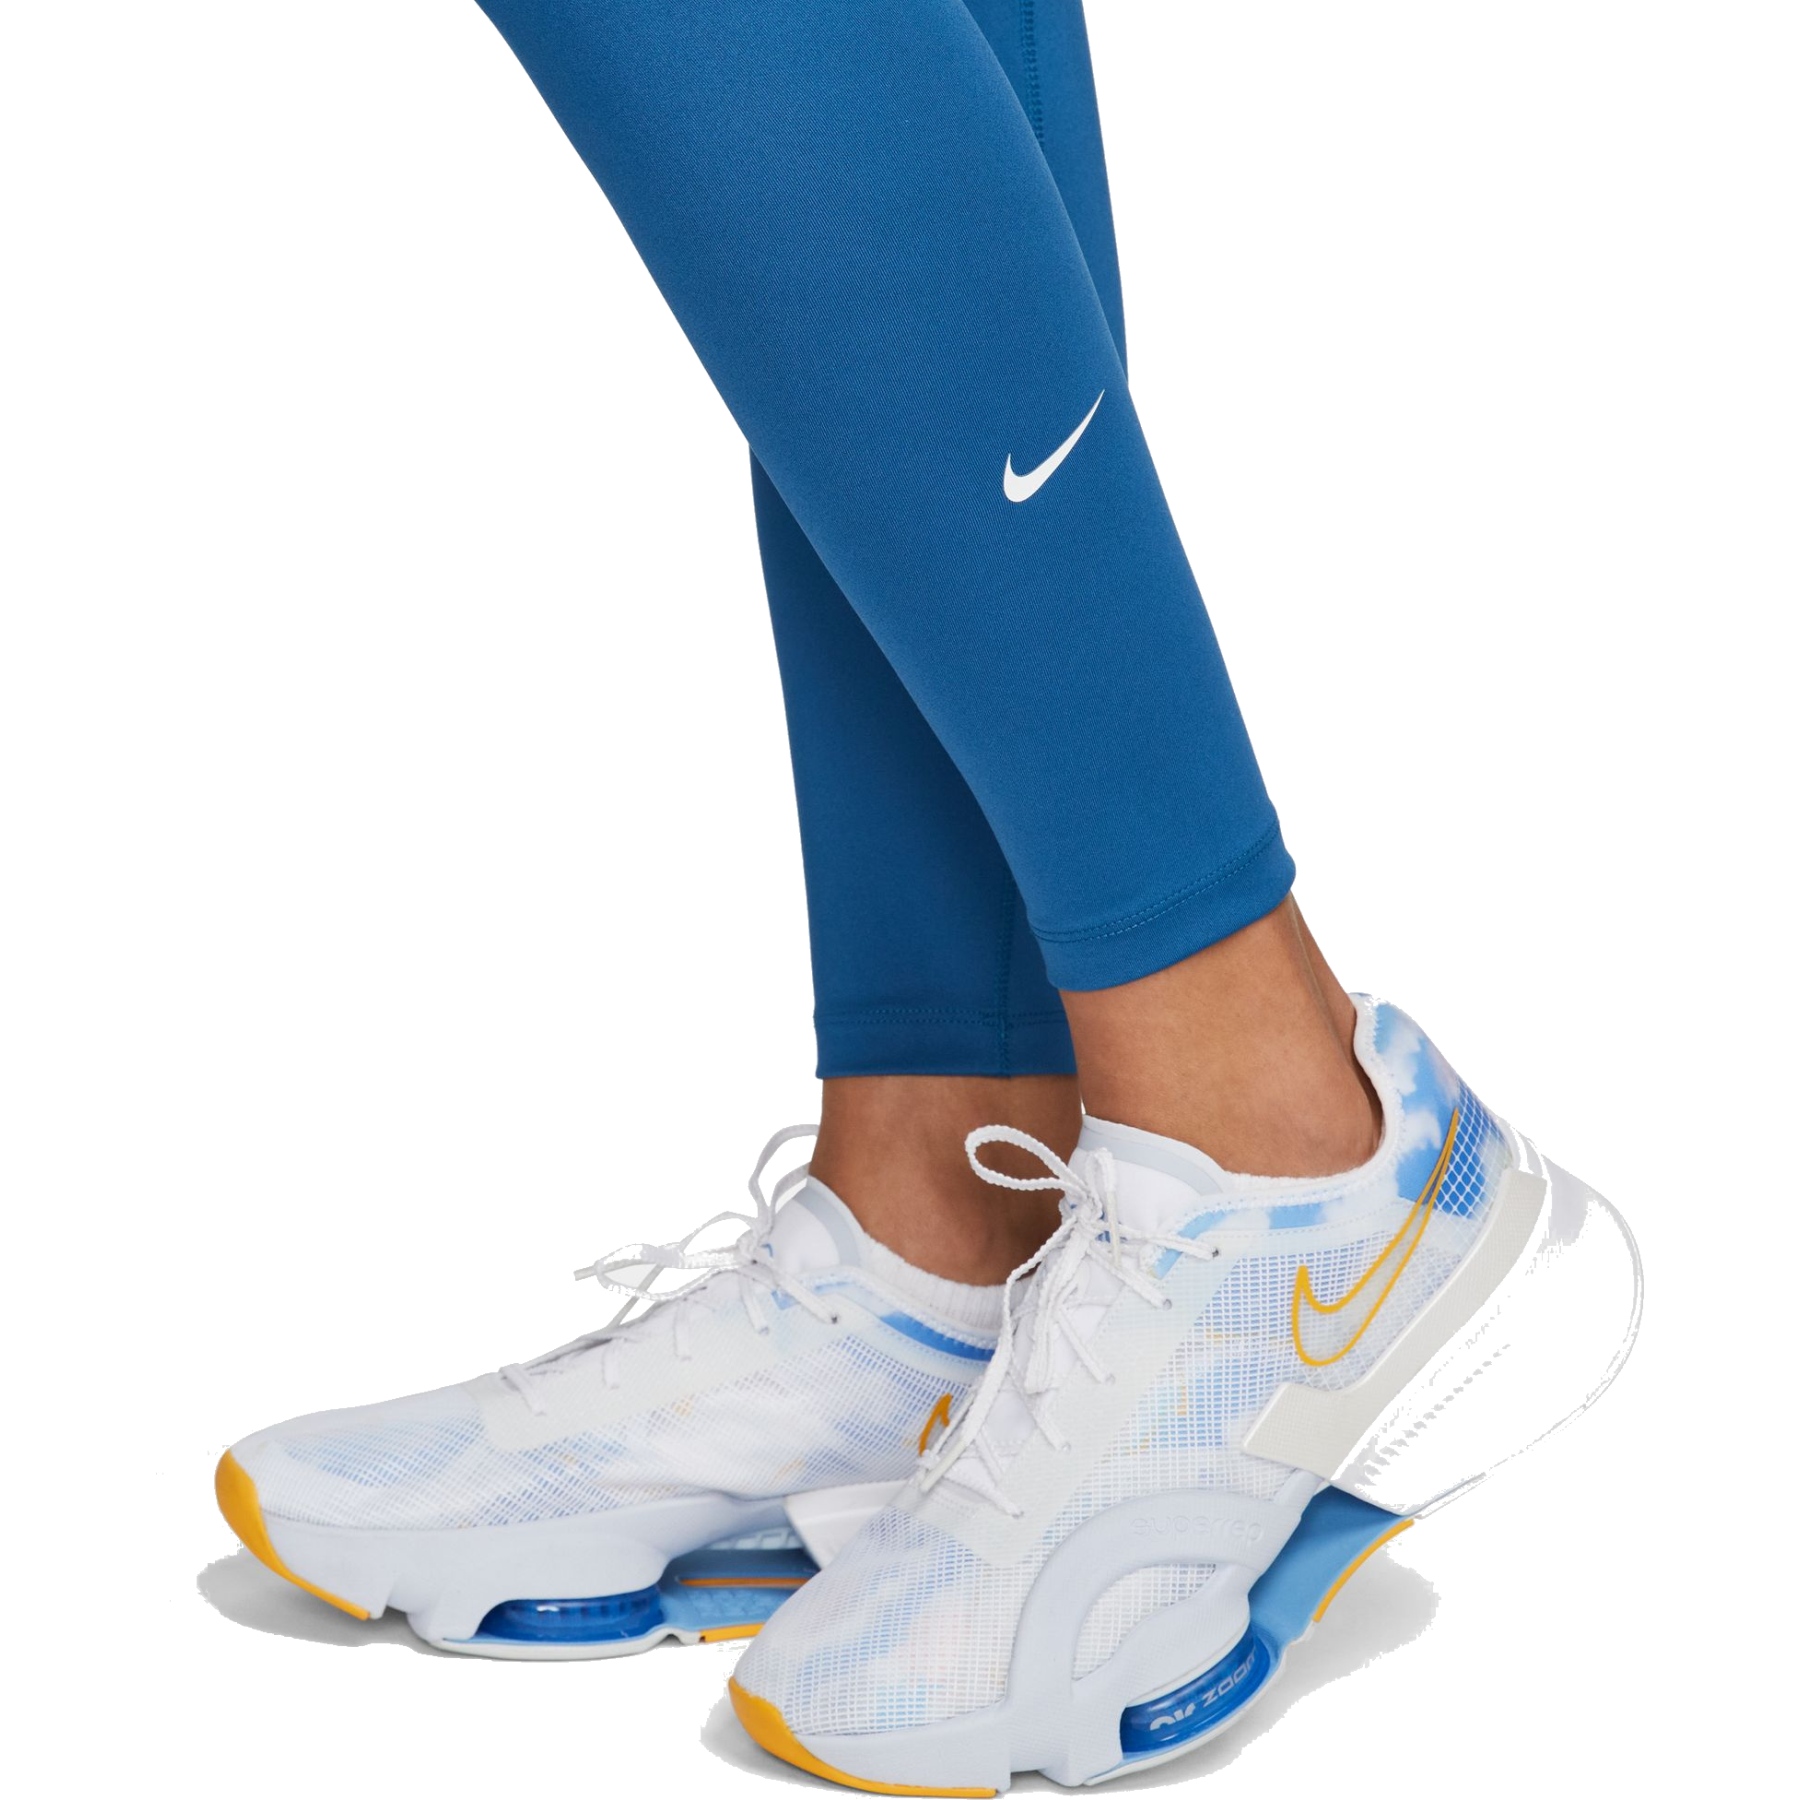 Nike Women's High-Rise Leggings - Purple, DM7278-503